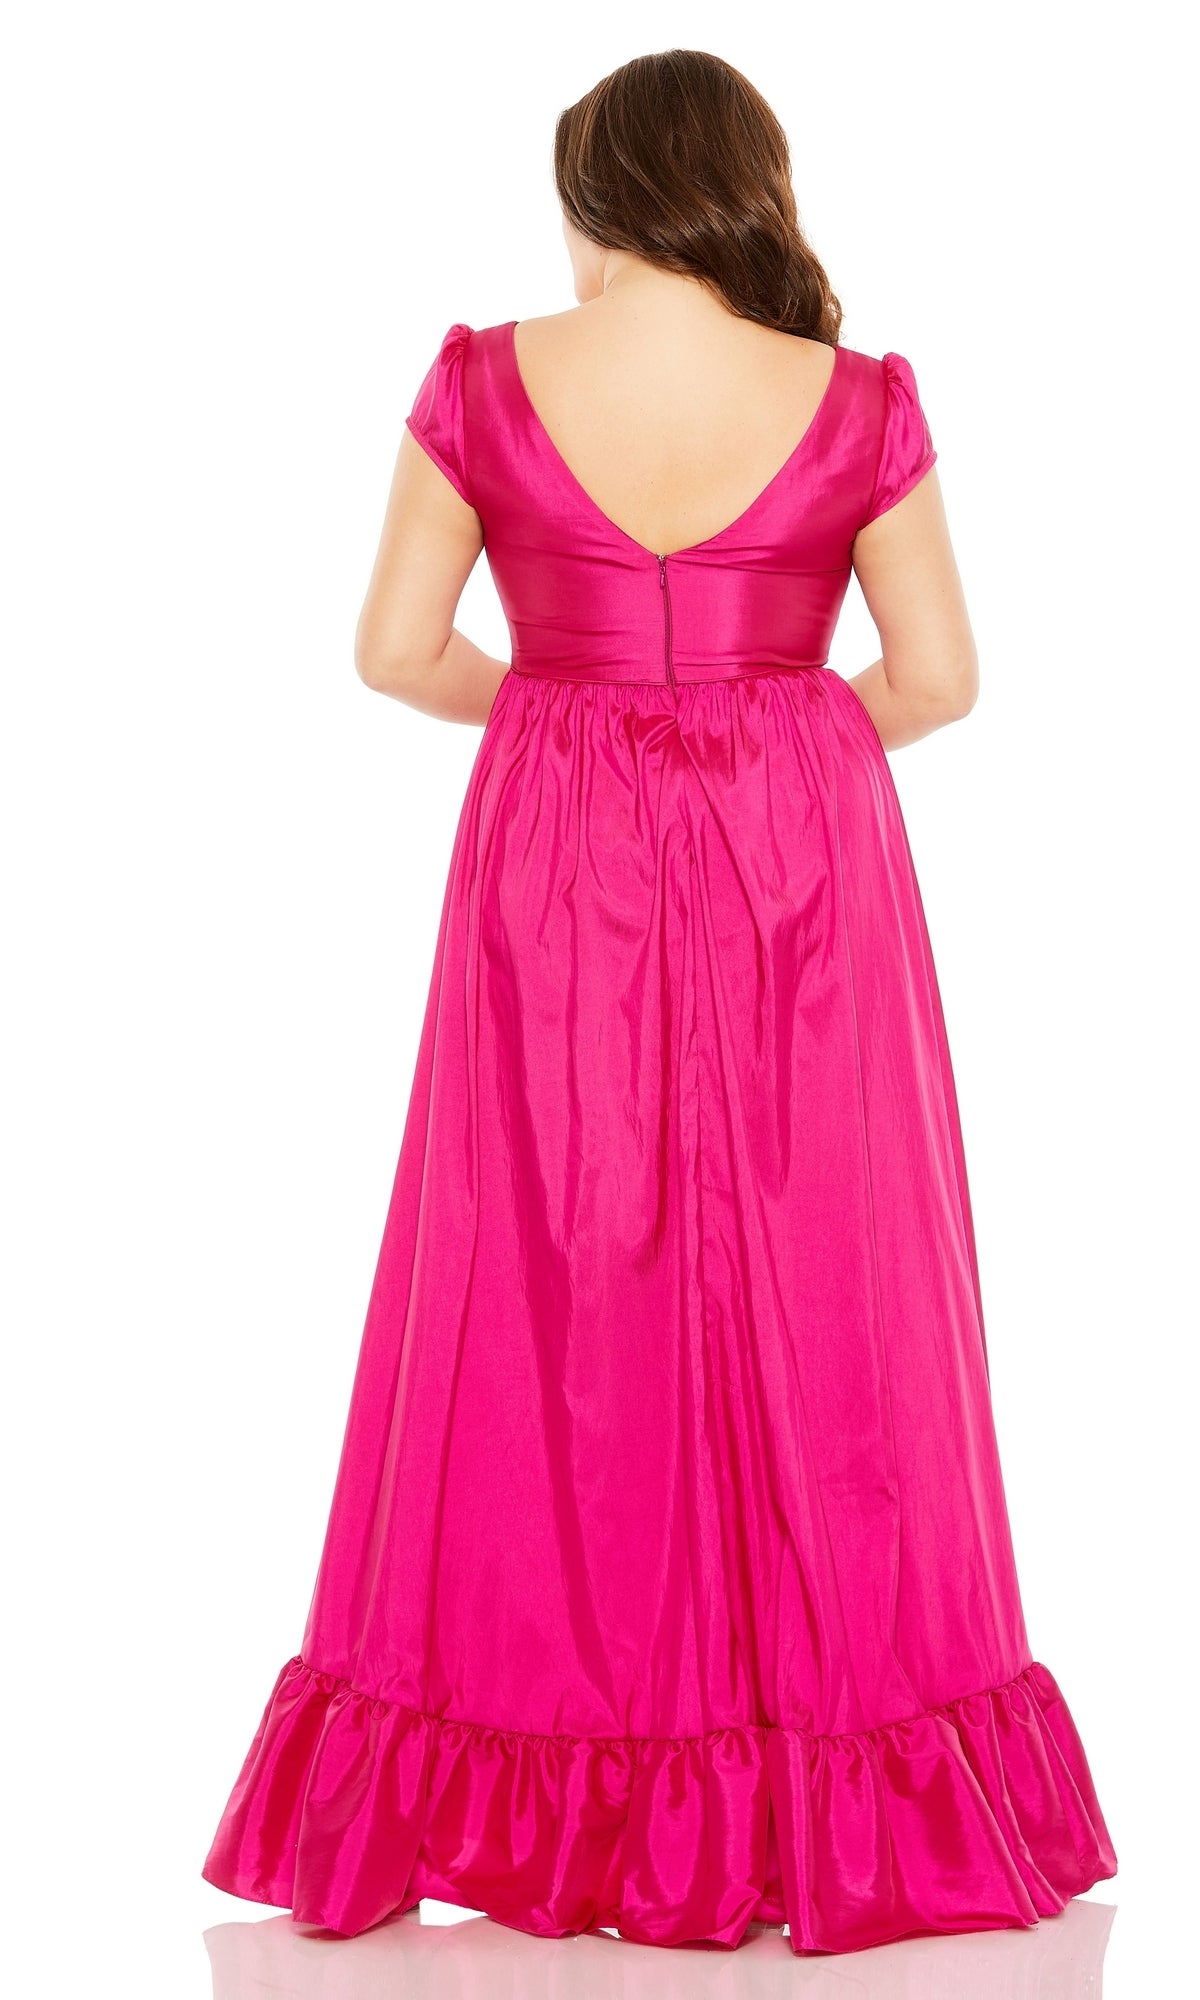 Long Plus-Size Formal Dress 68525 by Mac Duggal